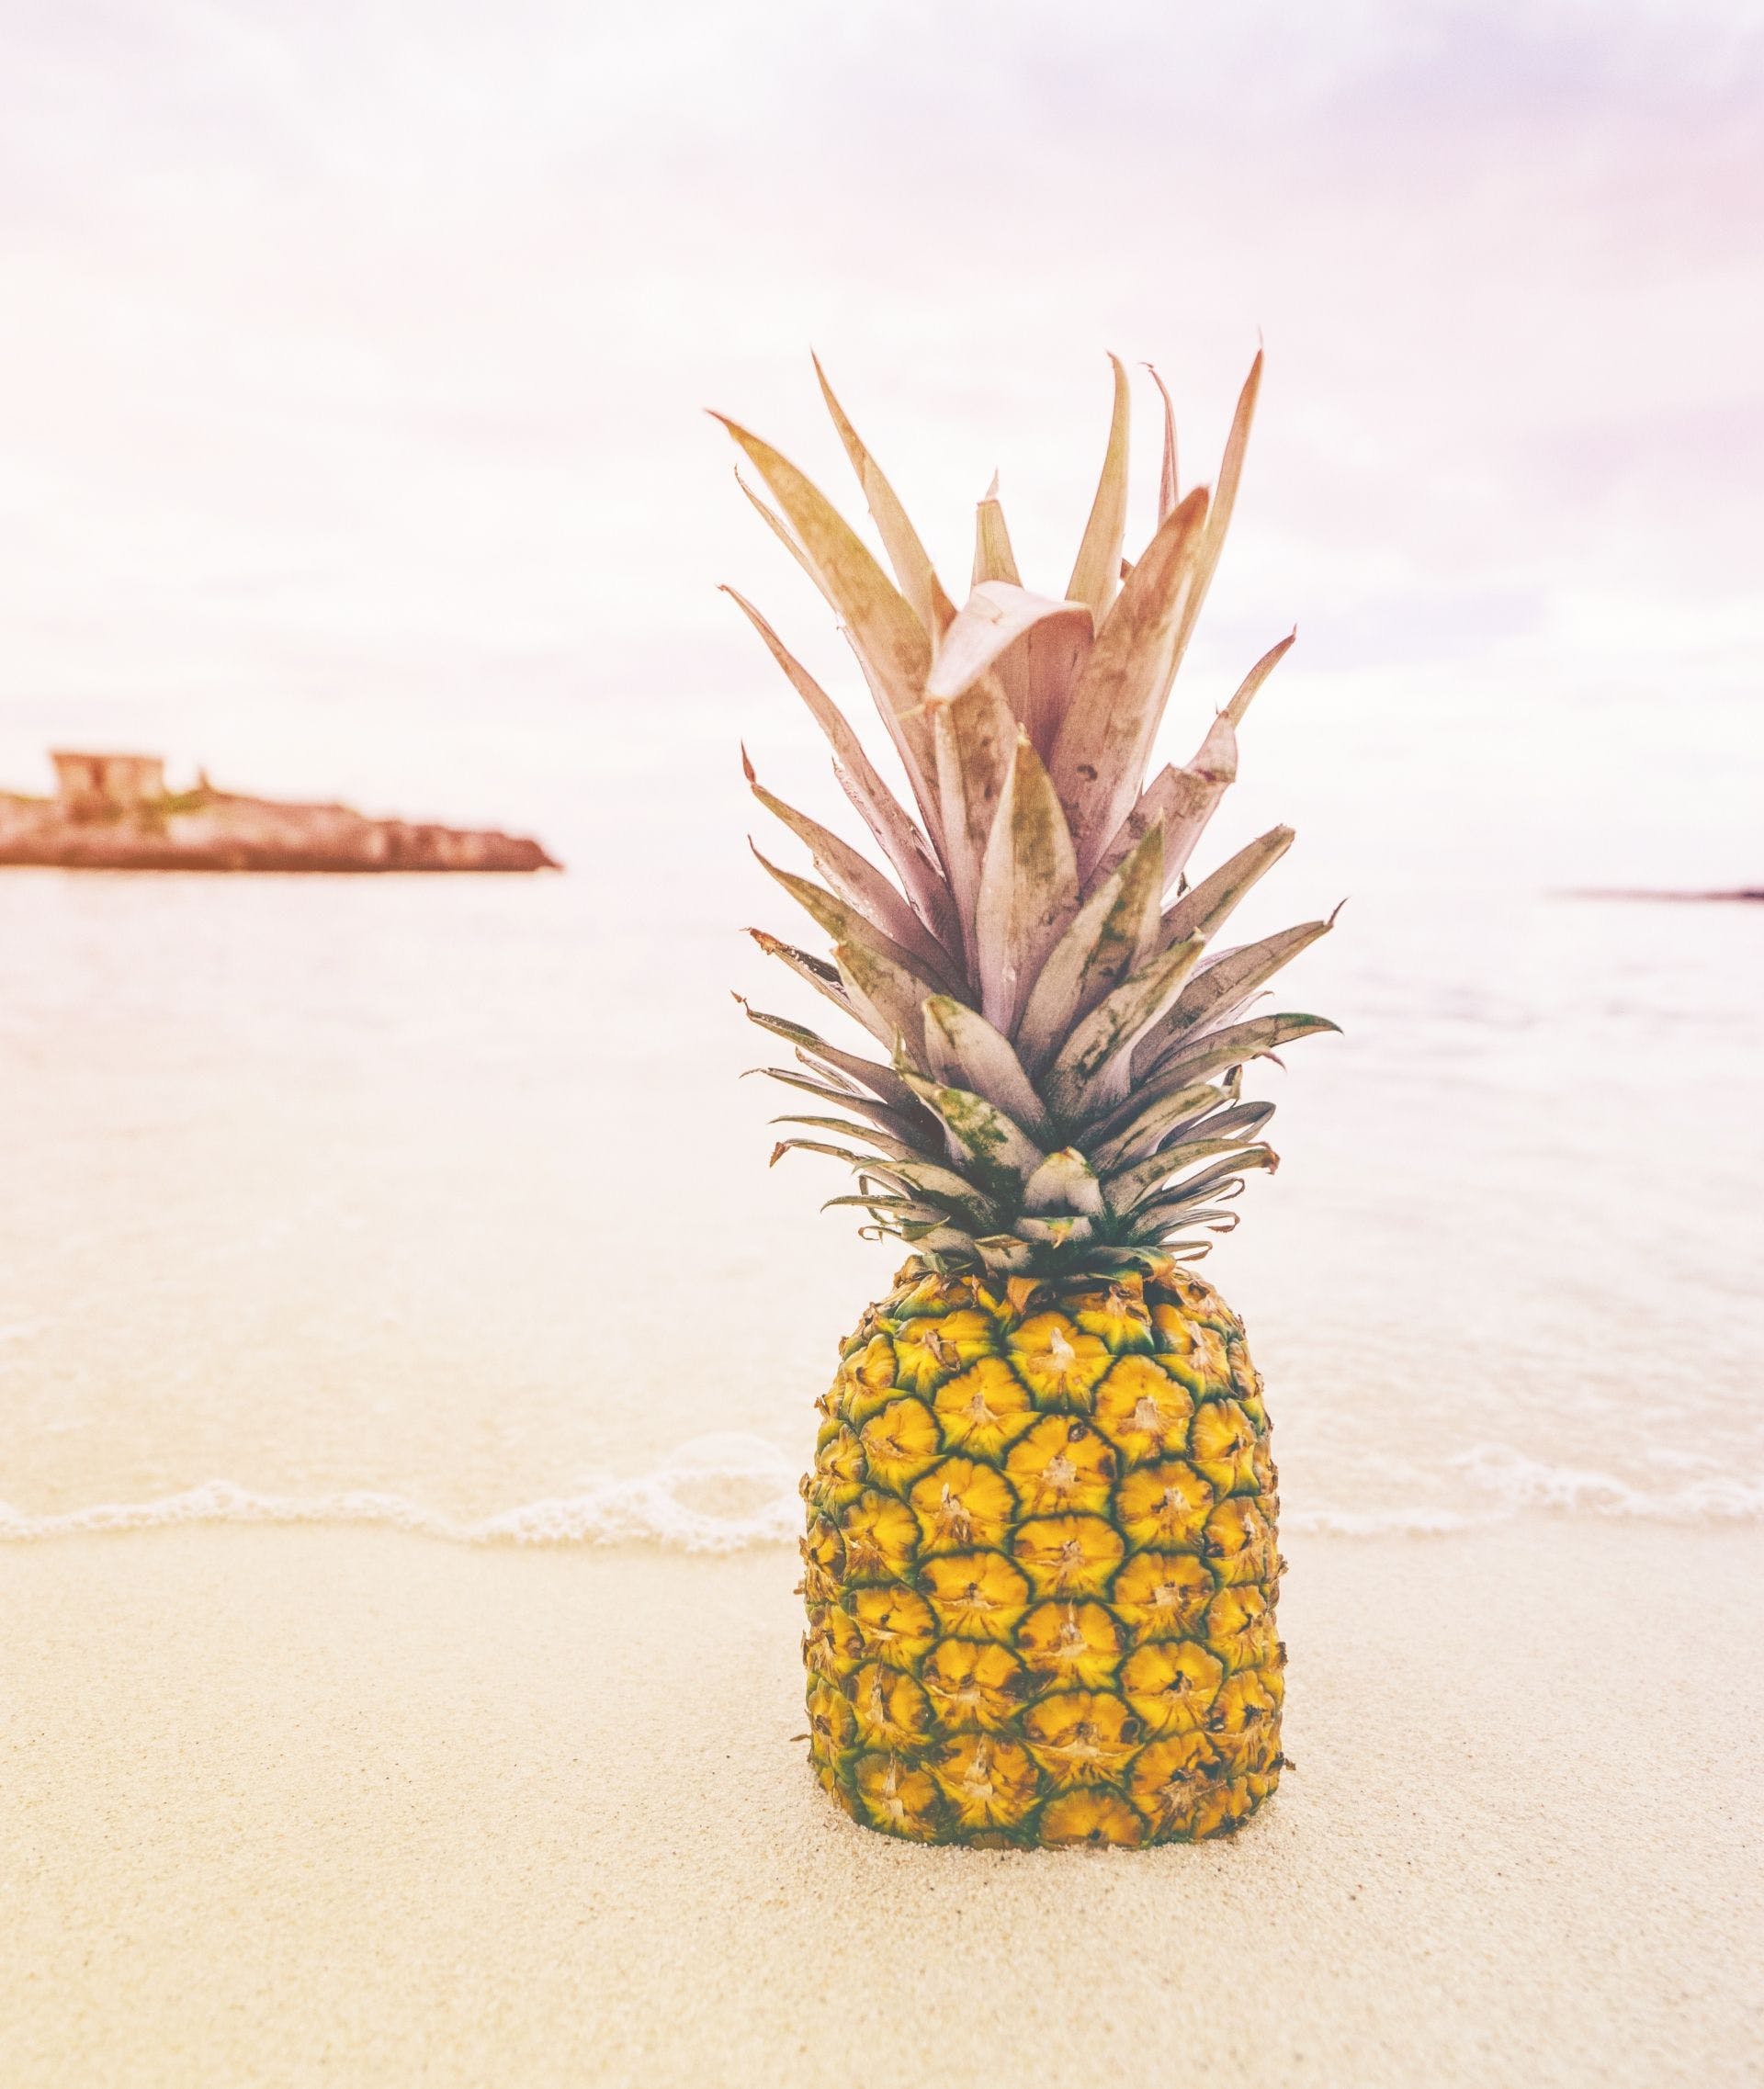 Download Pineapple Edible Fruit Wallpaper ·